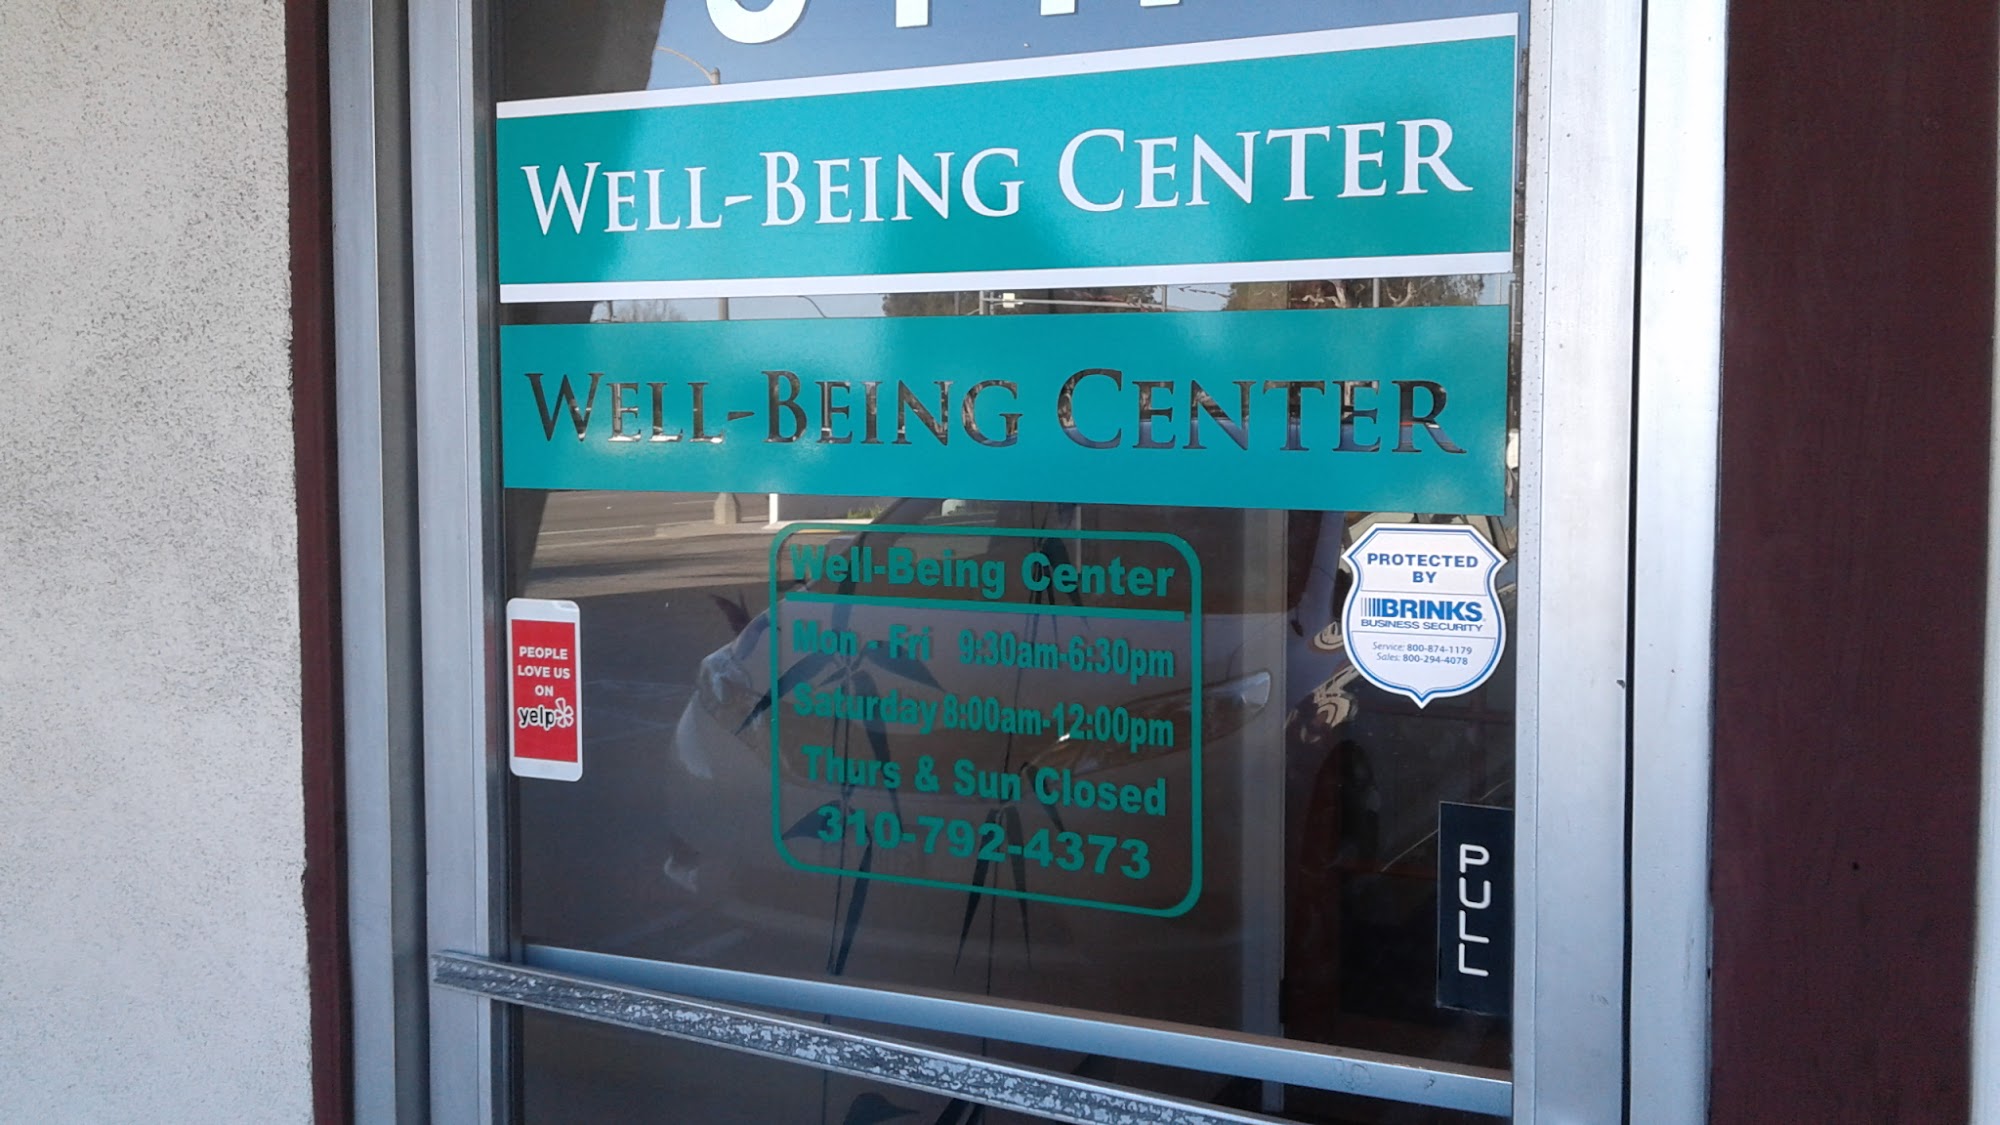 Well-Being Center